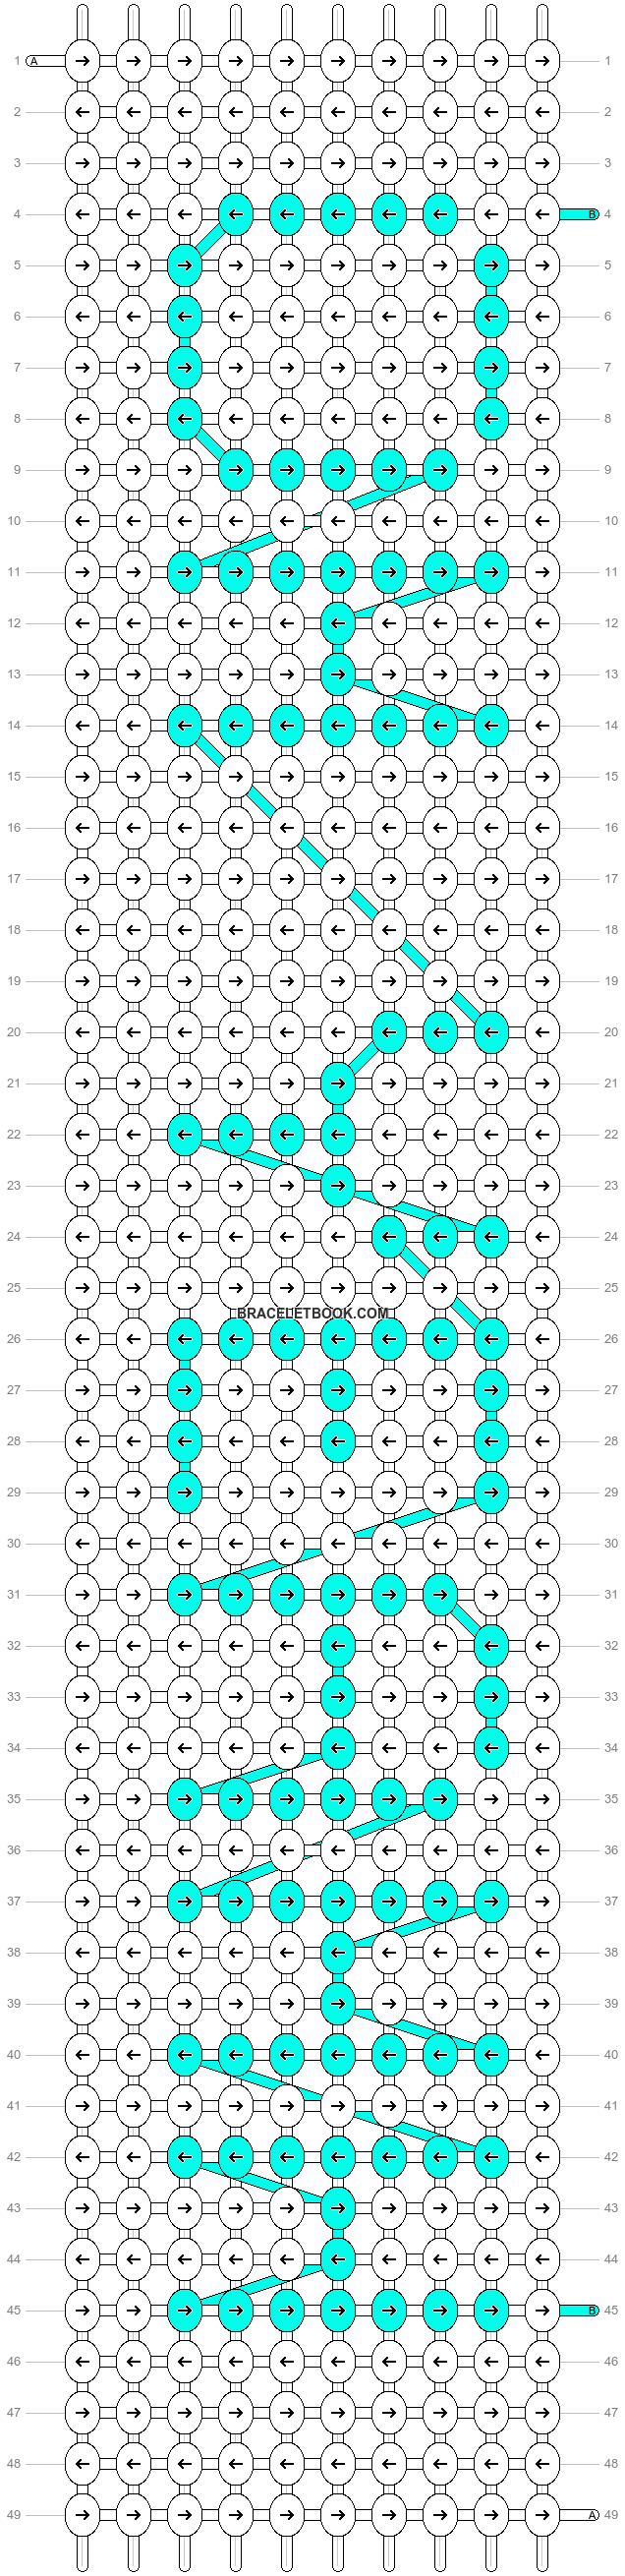 Alpha pattern #1974 pattern